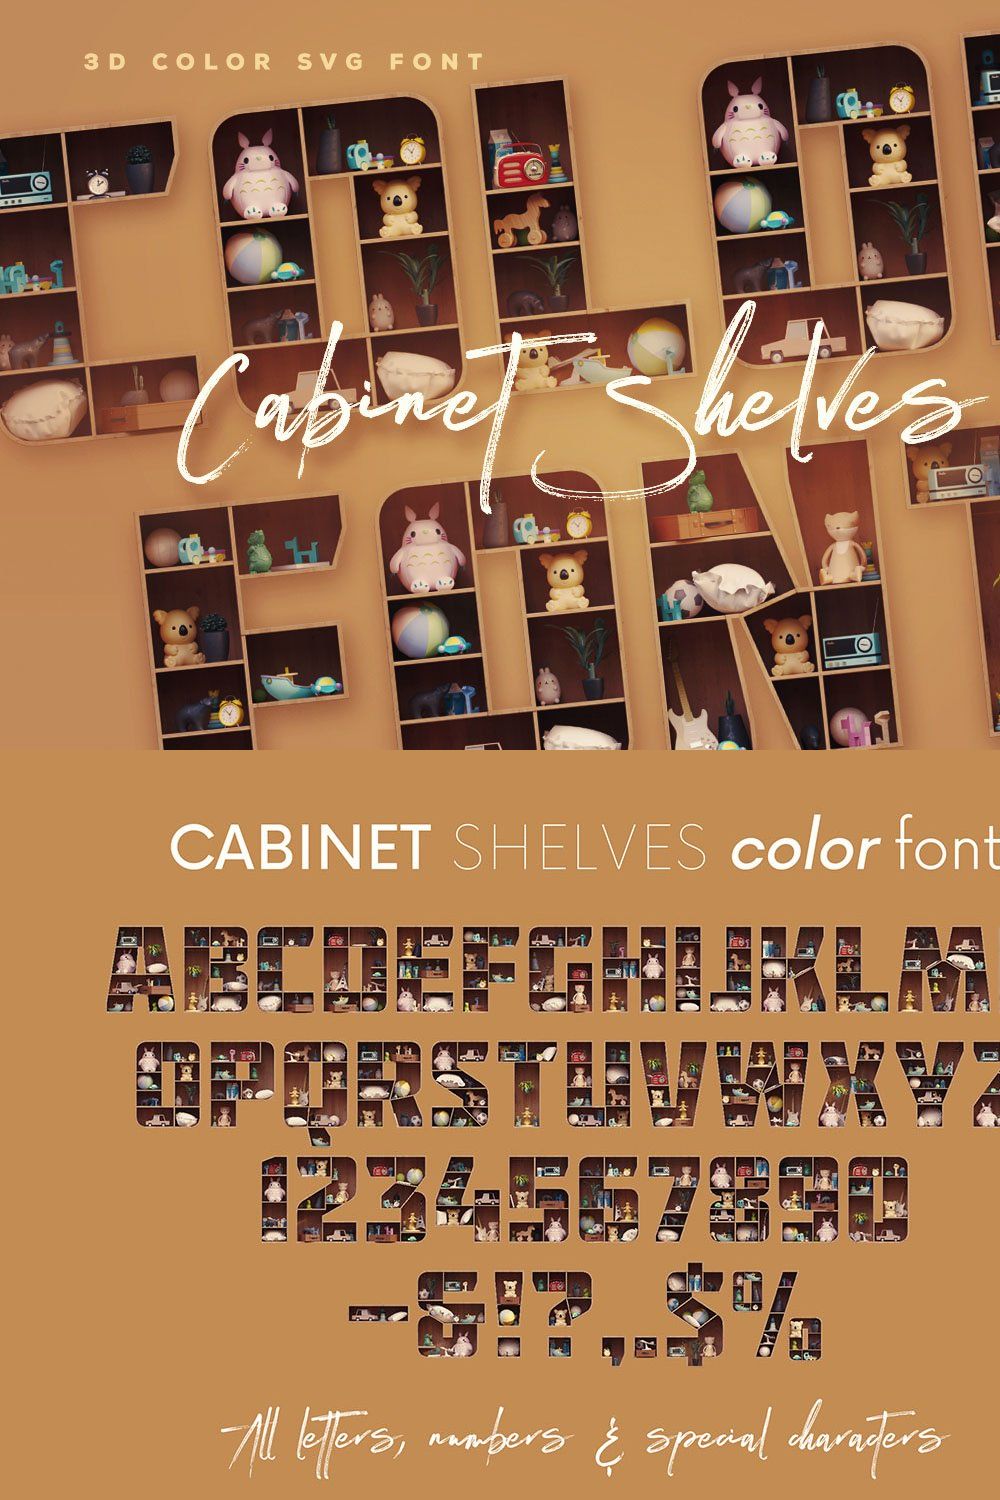 Cabinet Shelves - Color Font pinterest preview image.